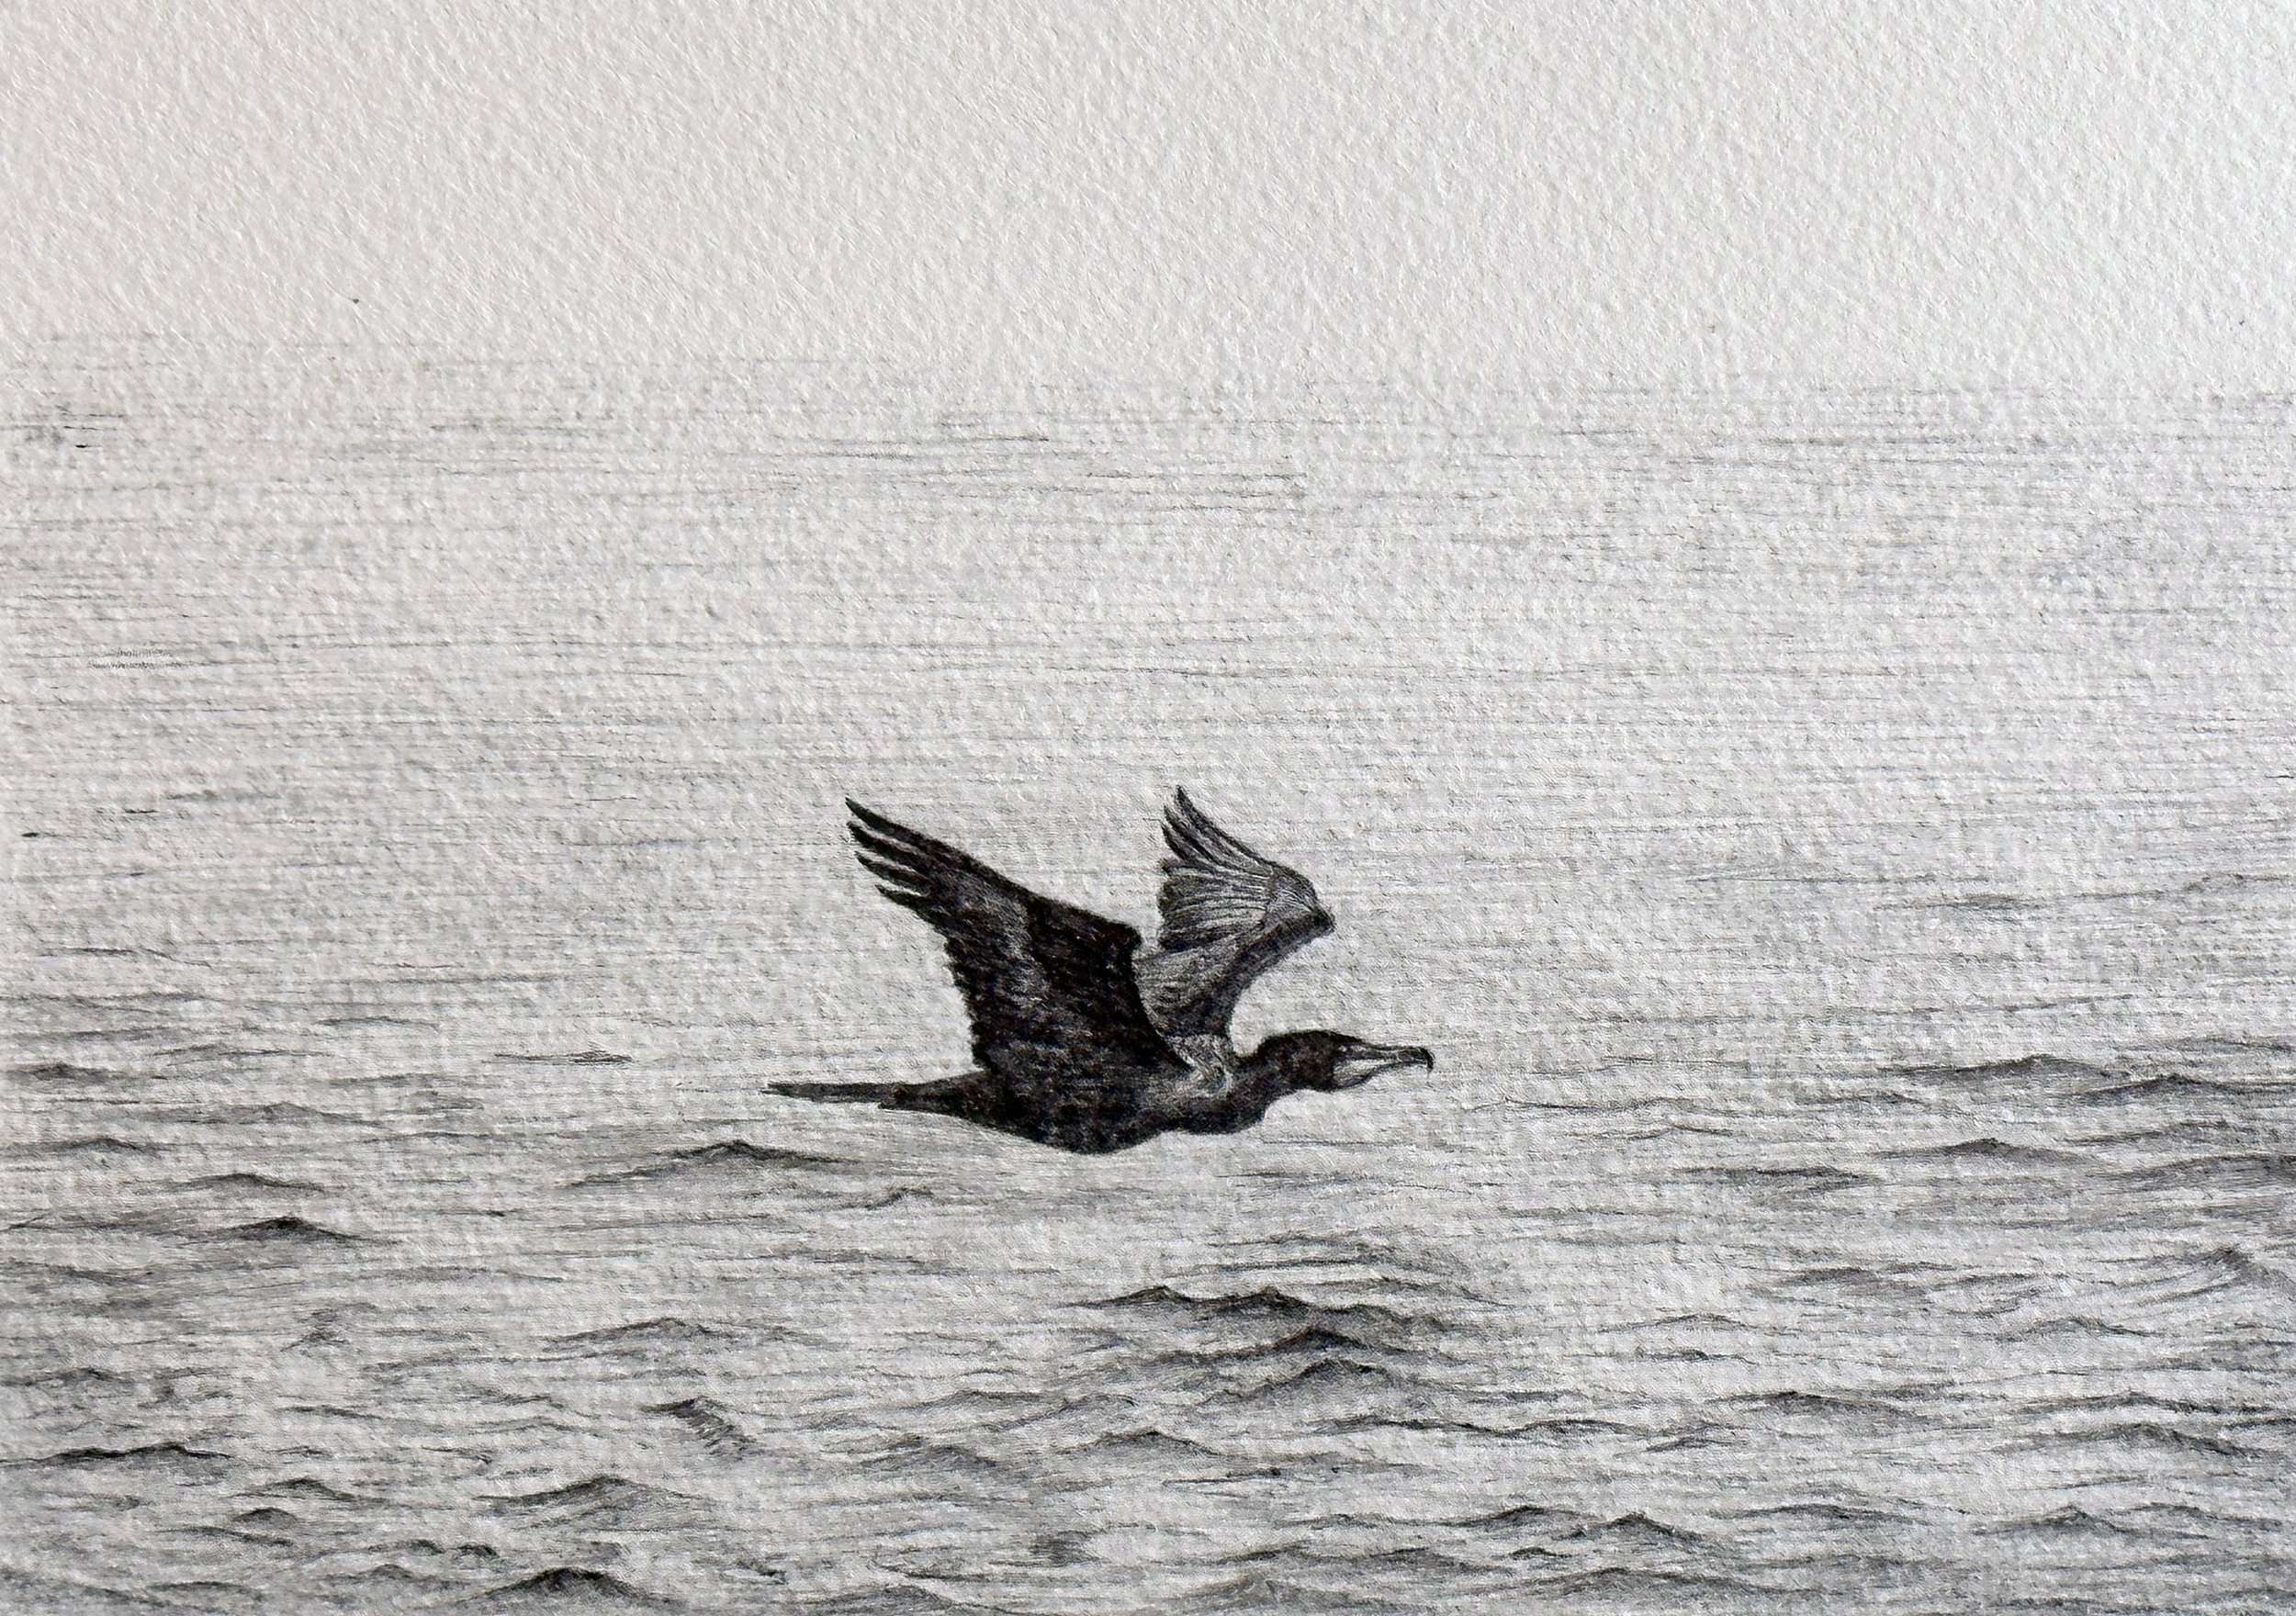 Cormorant in Flight - 7x5.jpg